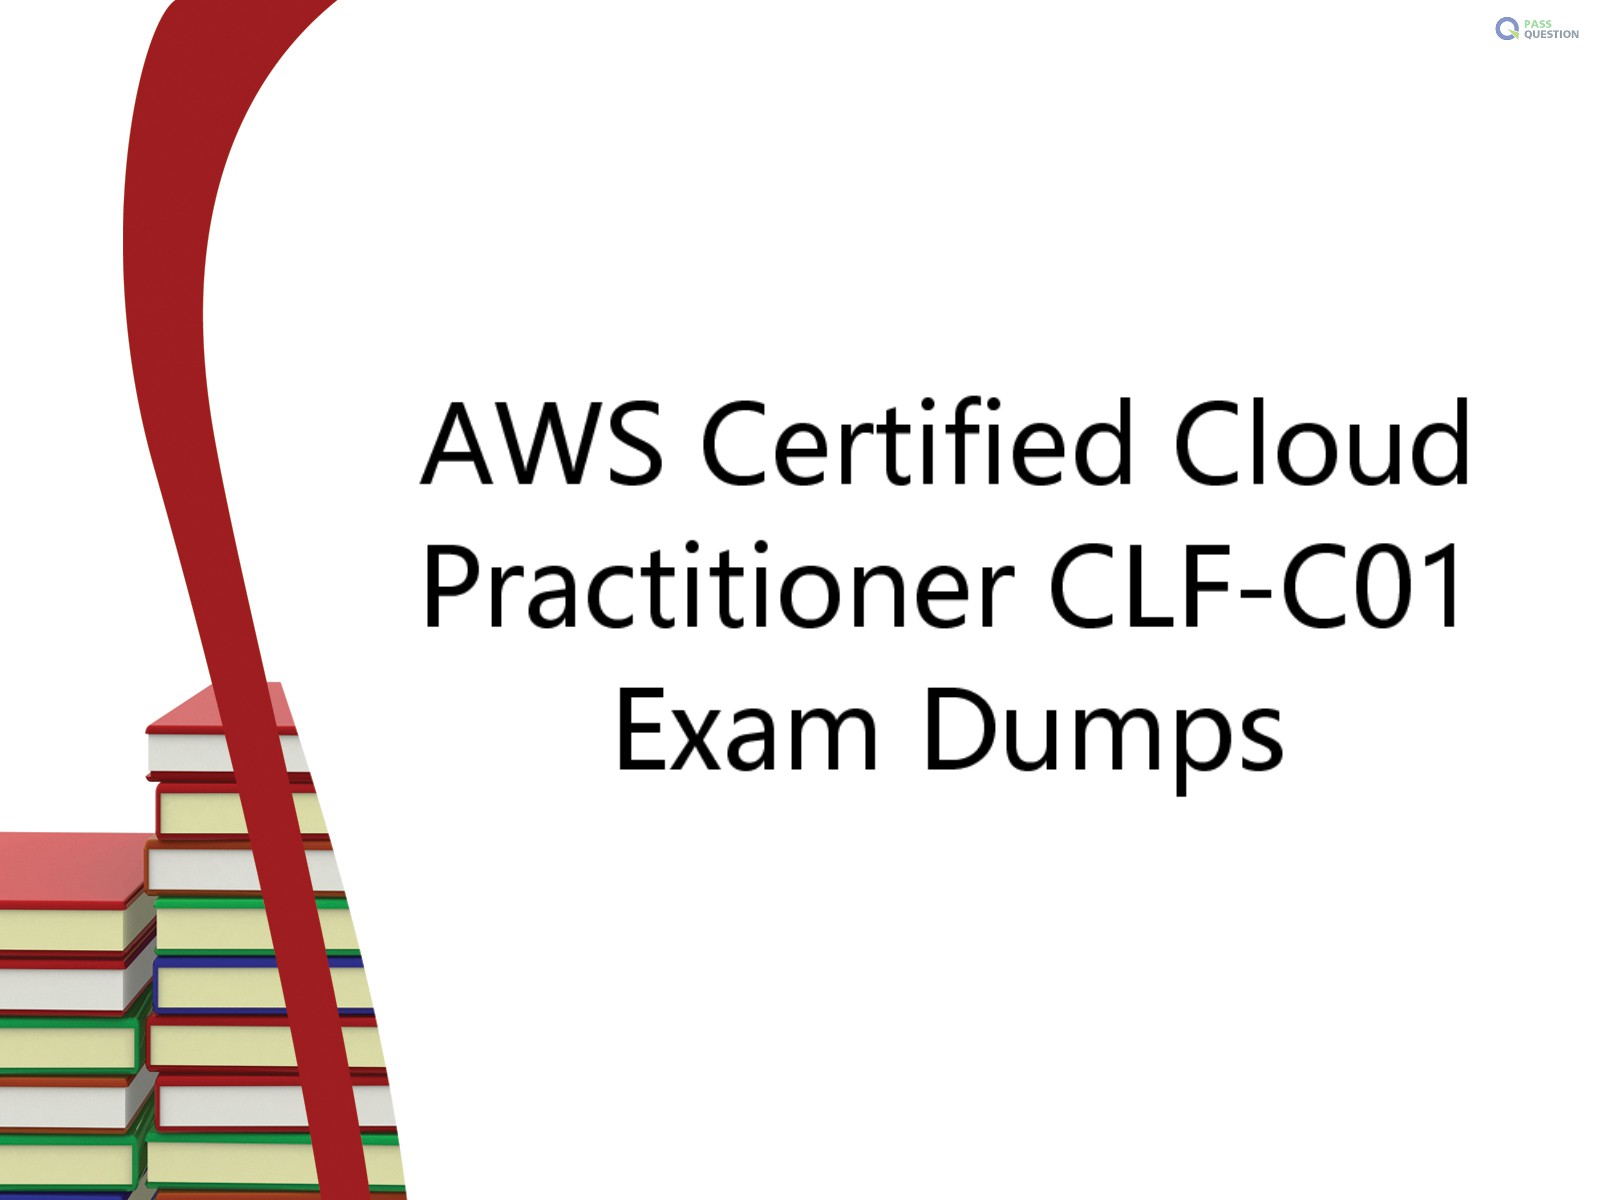 AWS Certified Cloud Practitioner CLFC01 Exam Dumps